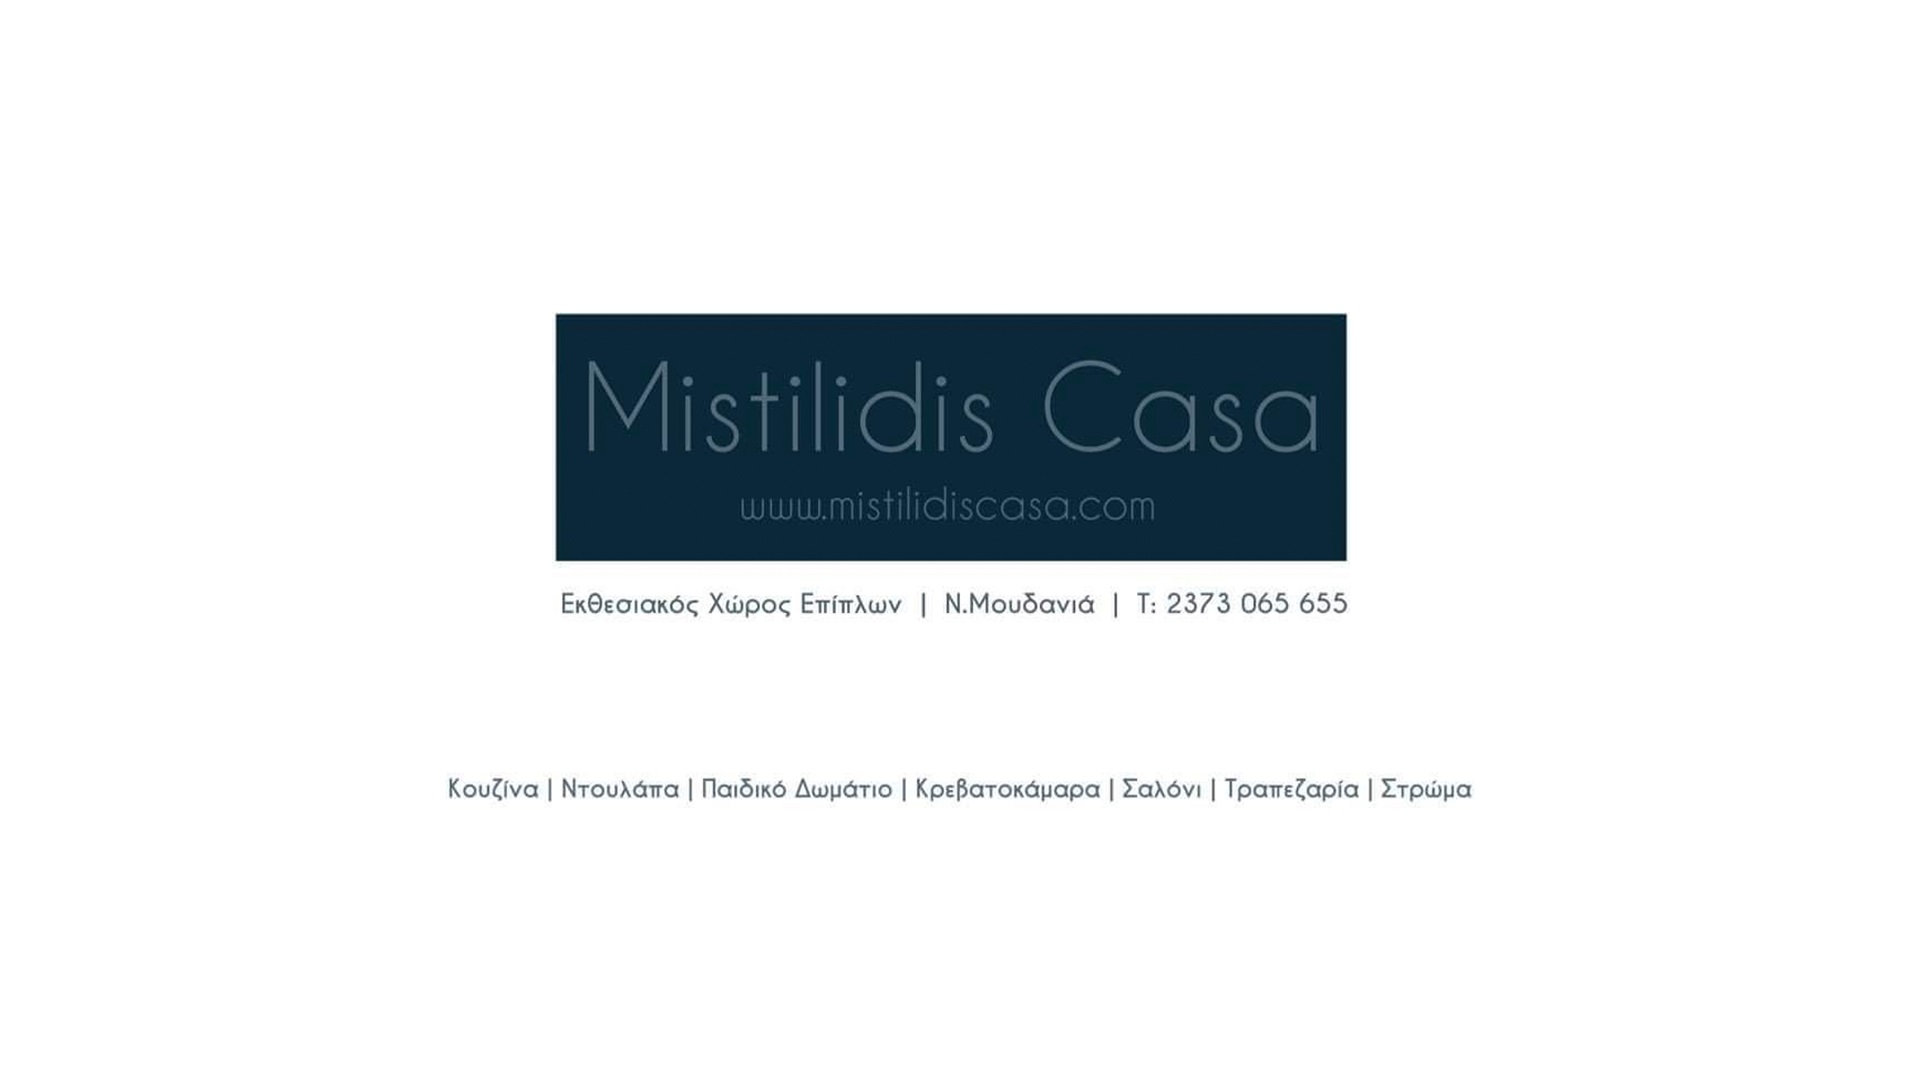 Mistilidis CASA